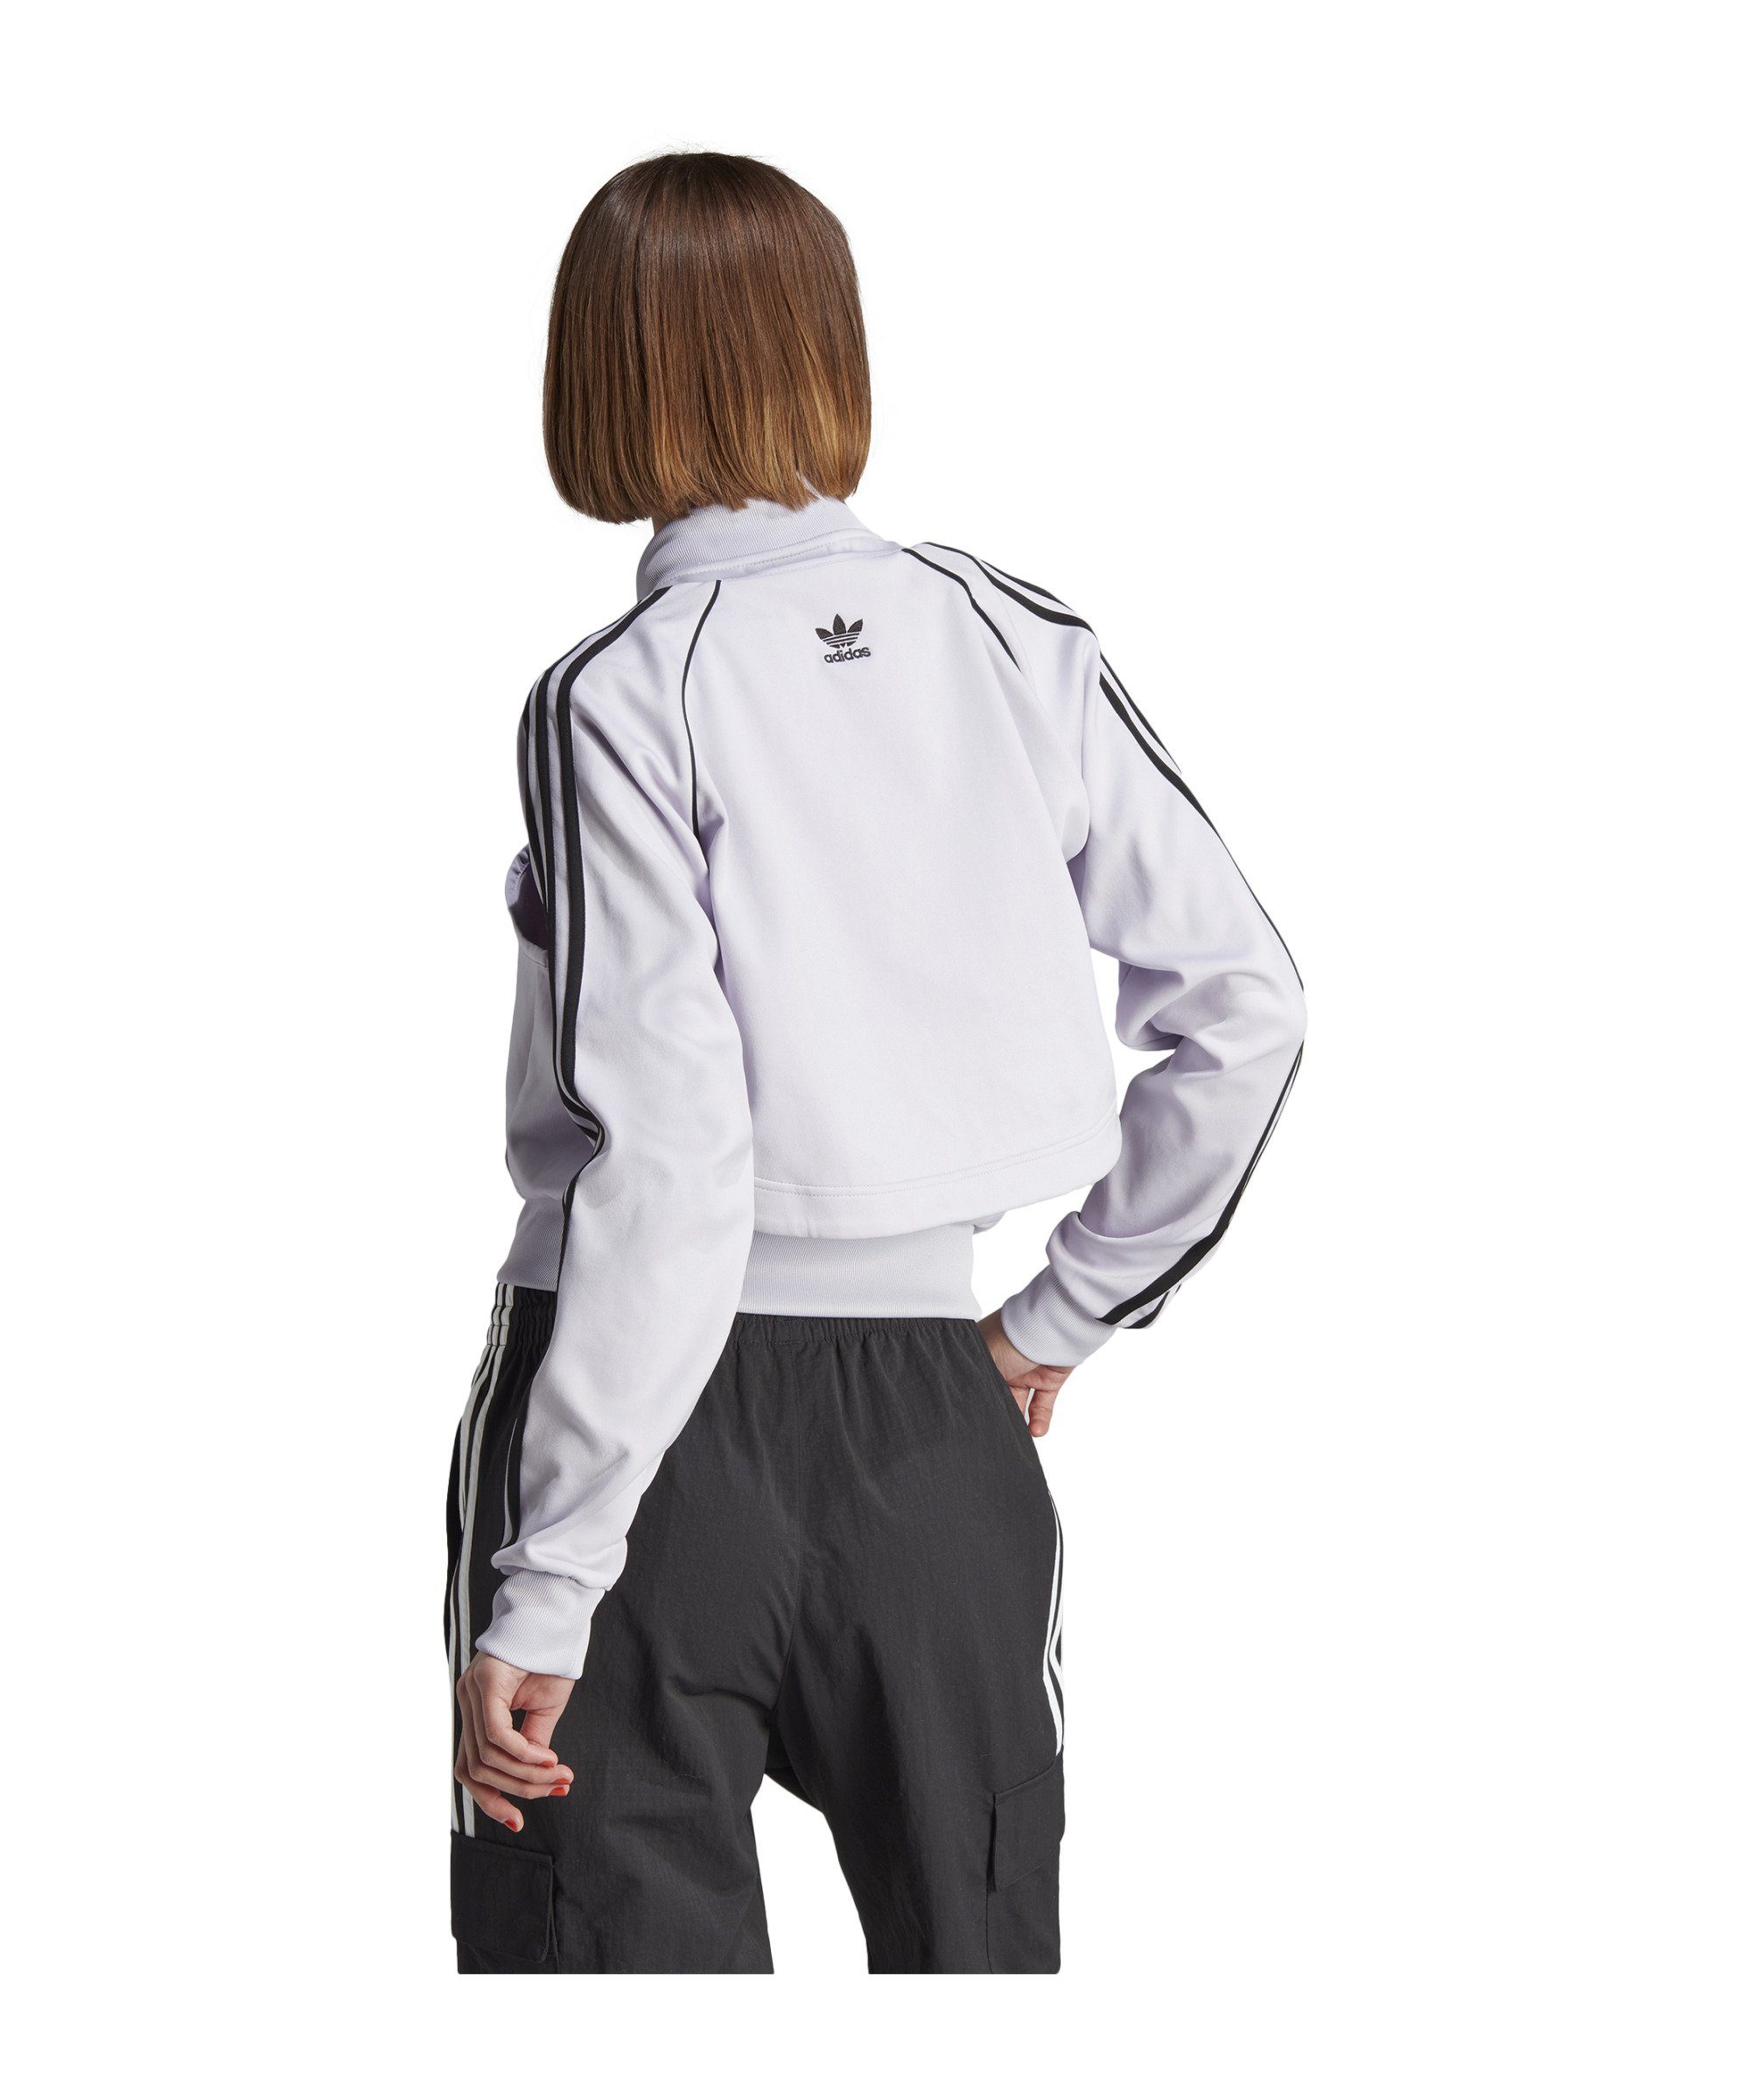 Performance silber Jacke Tracktop Trainingsjacke adidas Damen